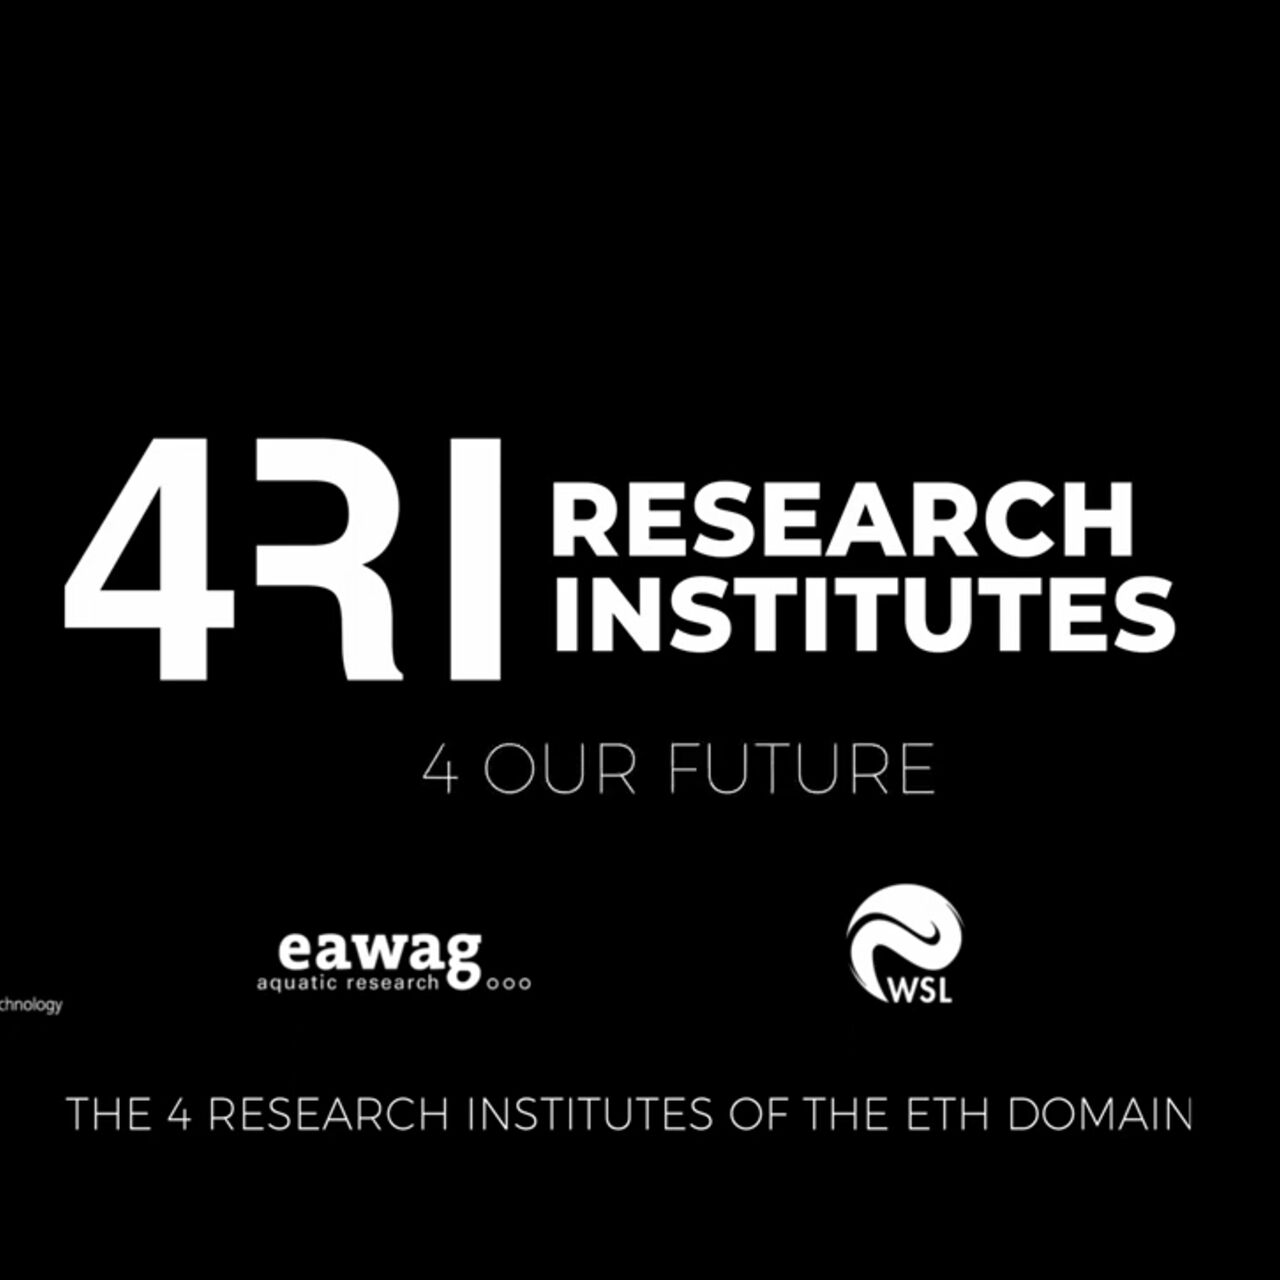 Centri svizzeri di ricerca: EMPA, EAWAG, WSL e PSI